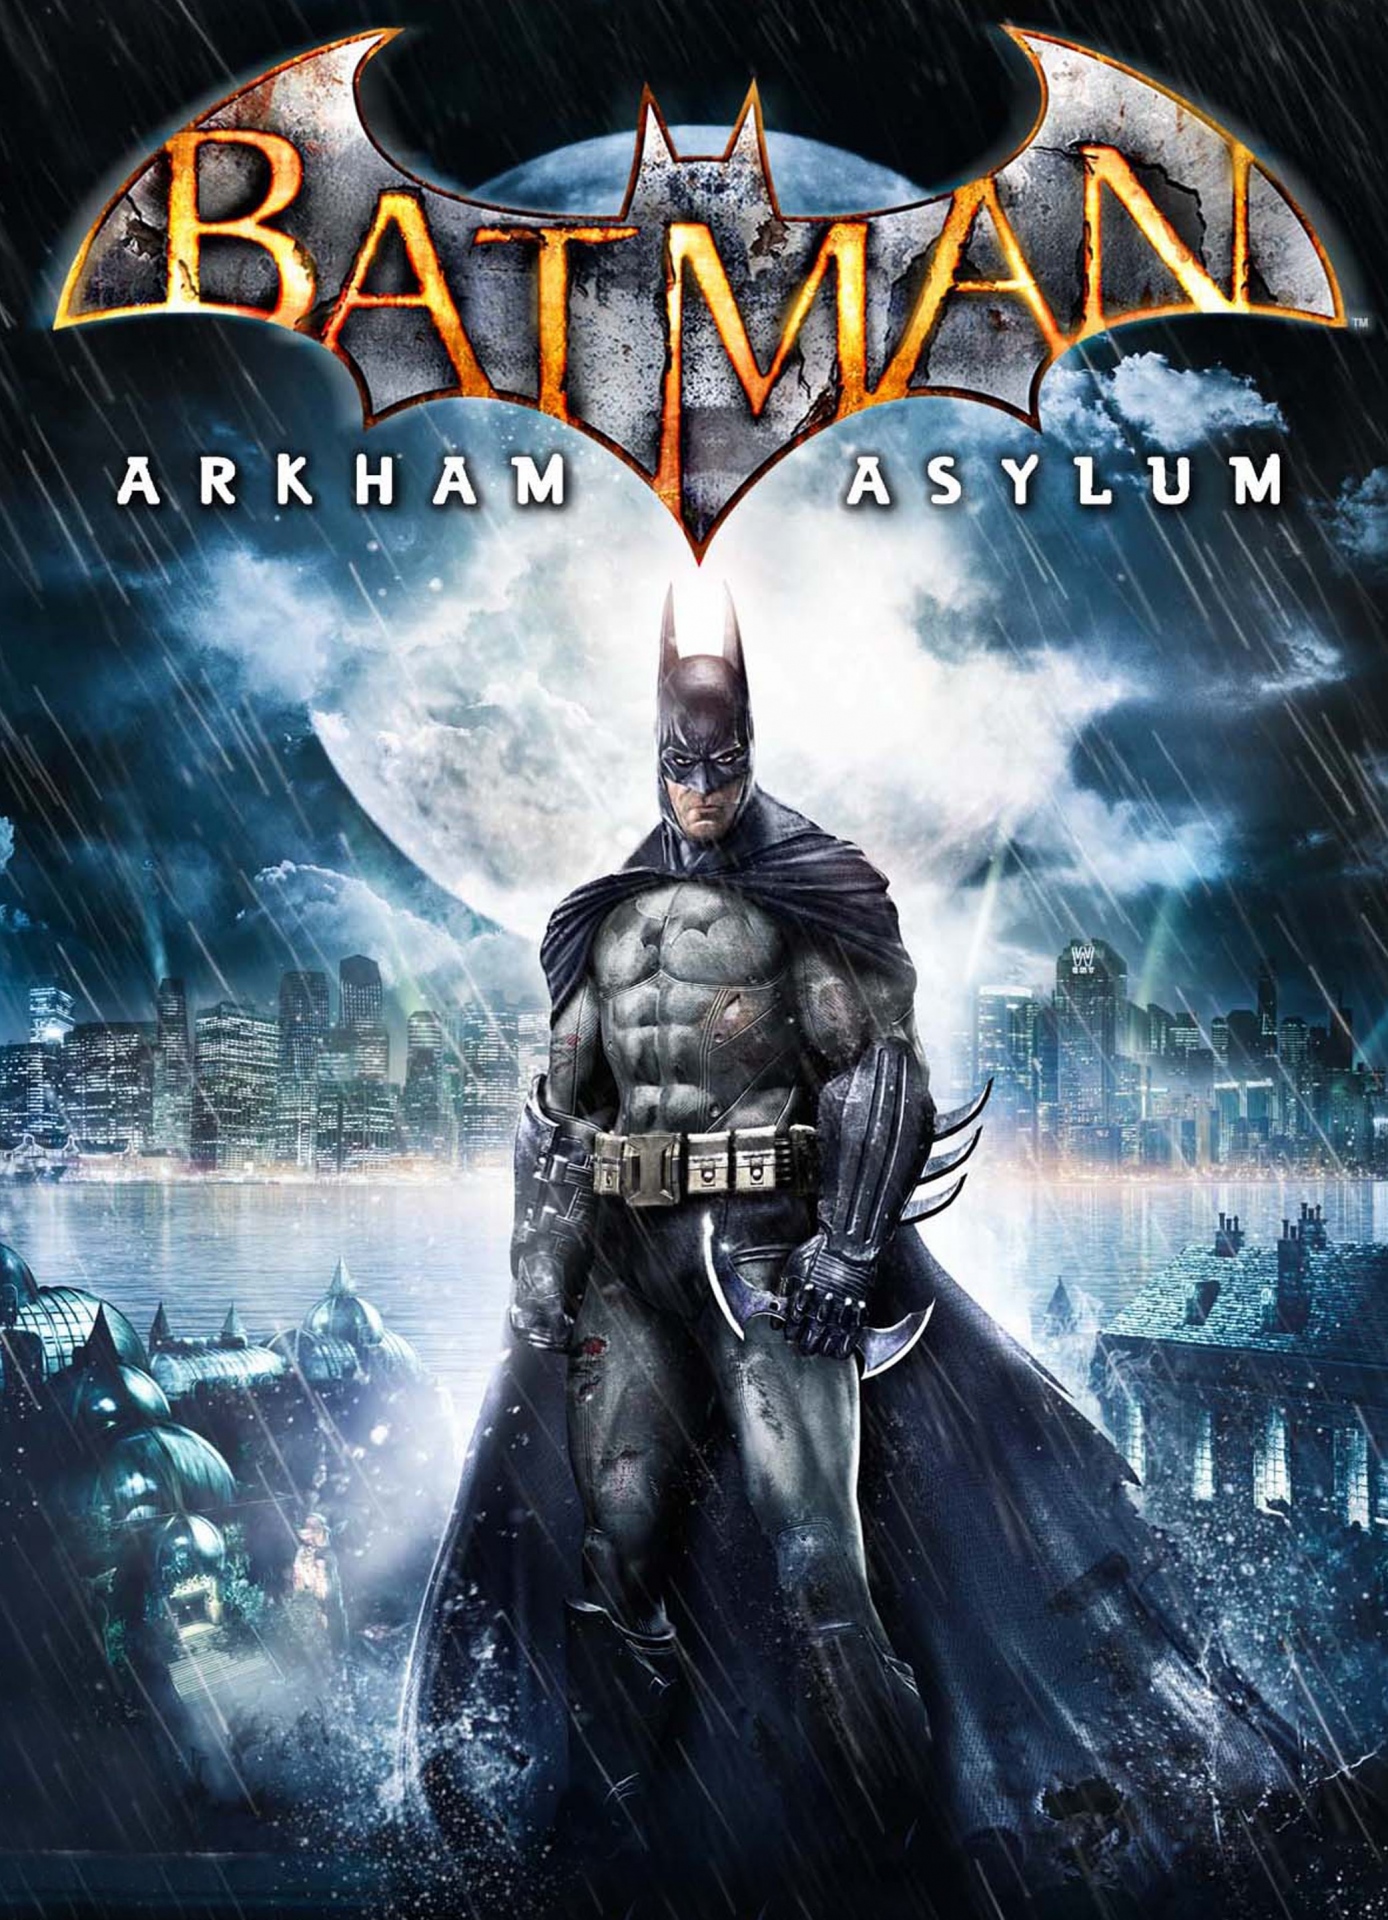 Download Batman: Arkham Asylum torrent from Khatab